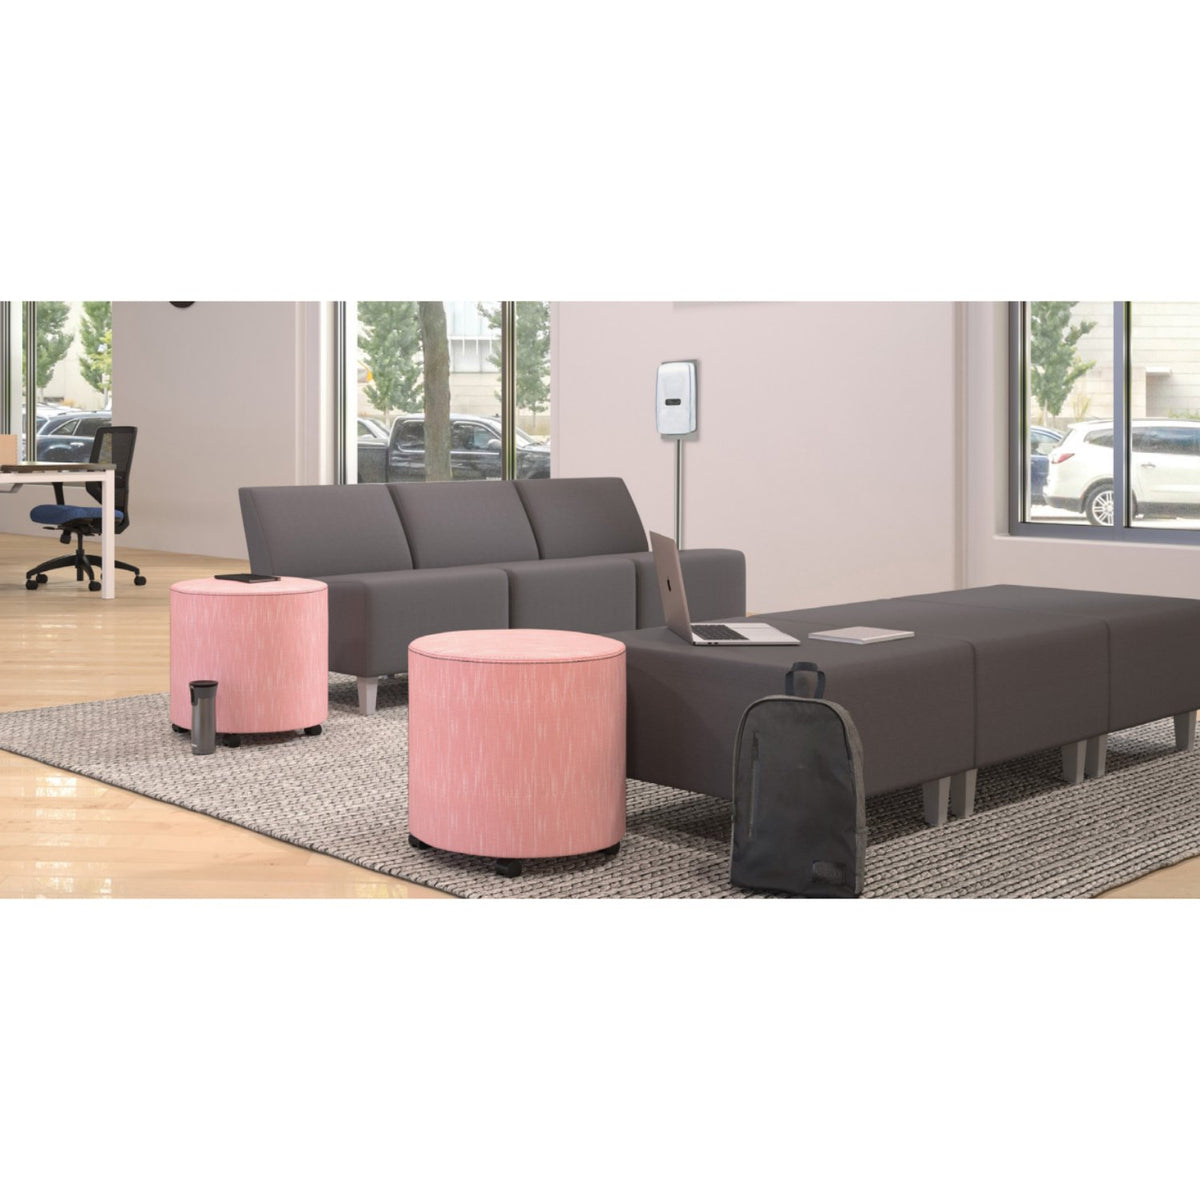 Duckys Office Furniture - Universal Hand Sanitizer Station - Duckys Office Furniture